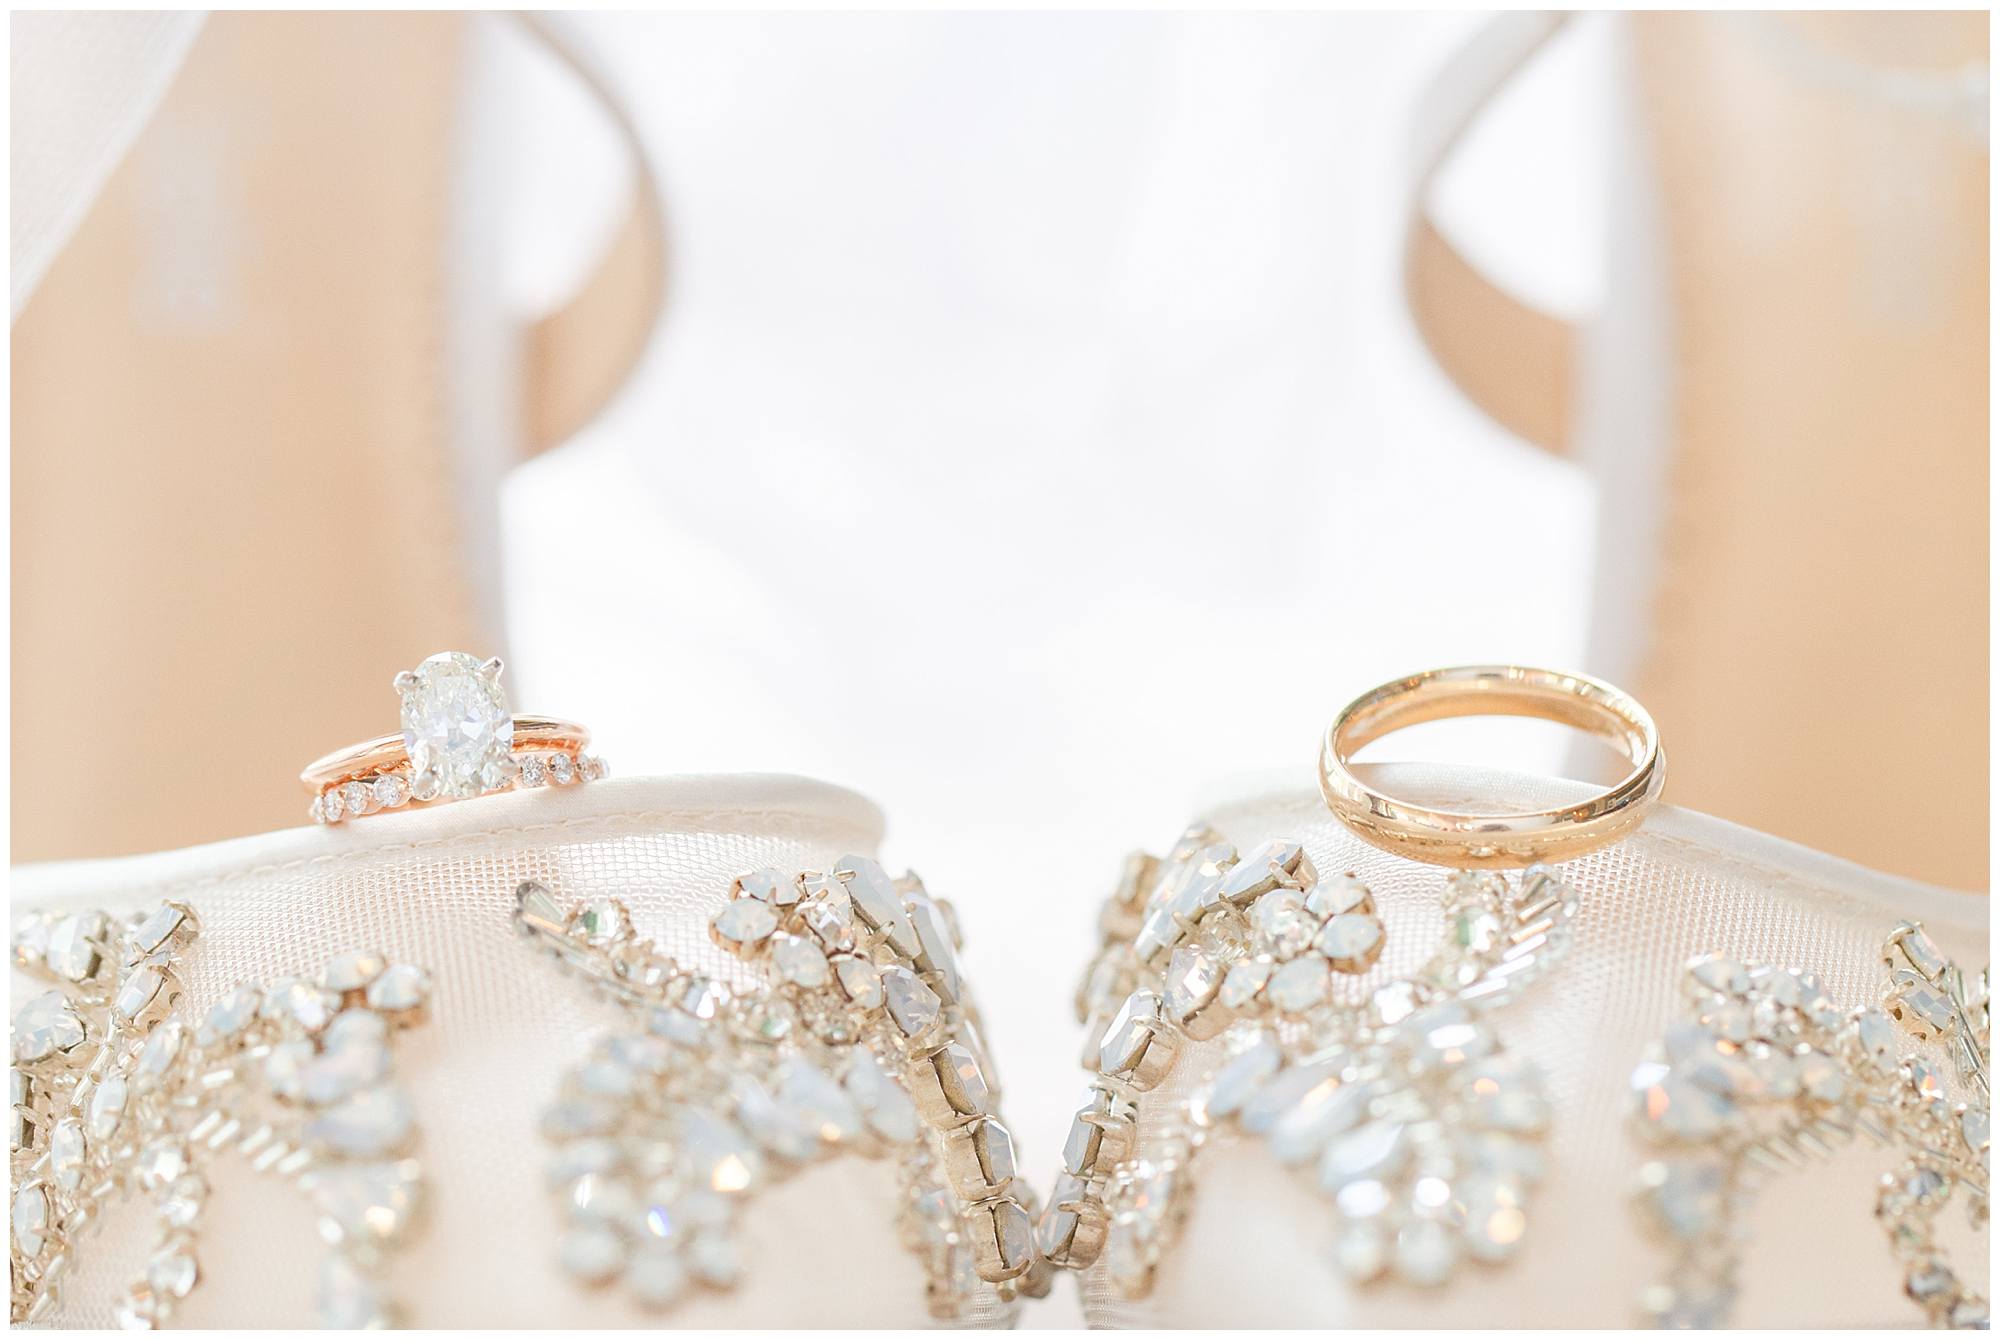 Wedding rings, ring shot, bella belle shoes